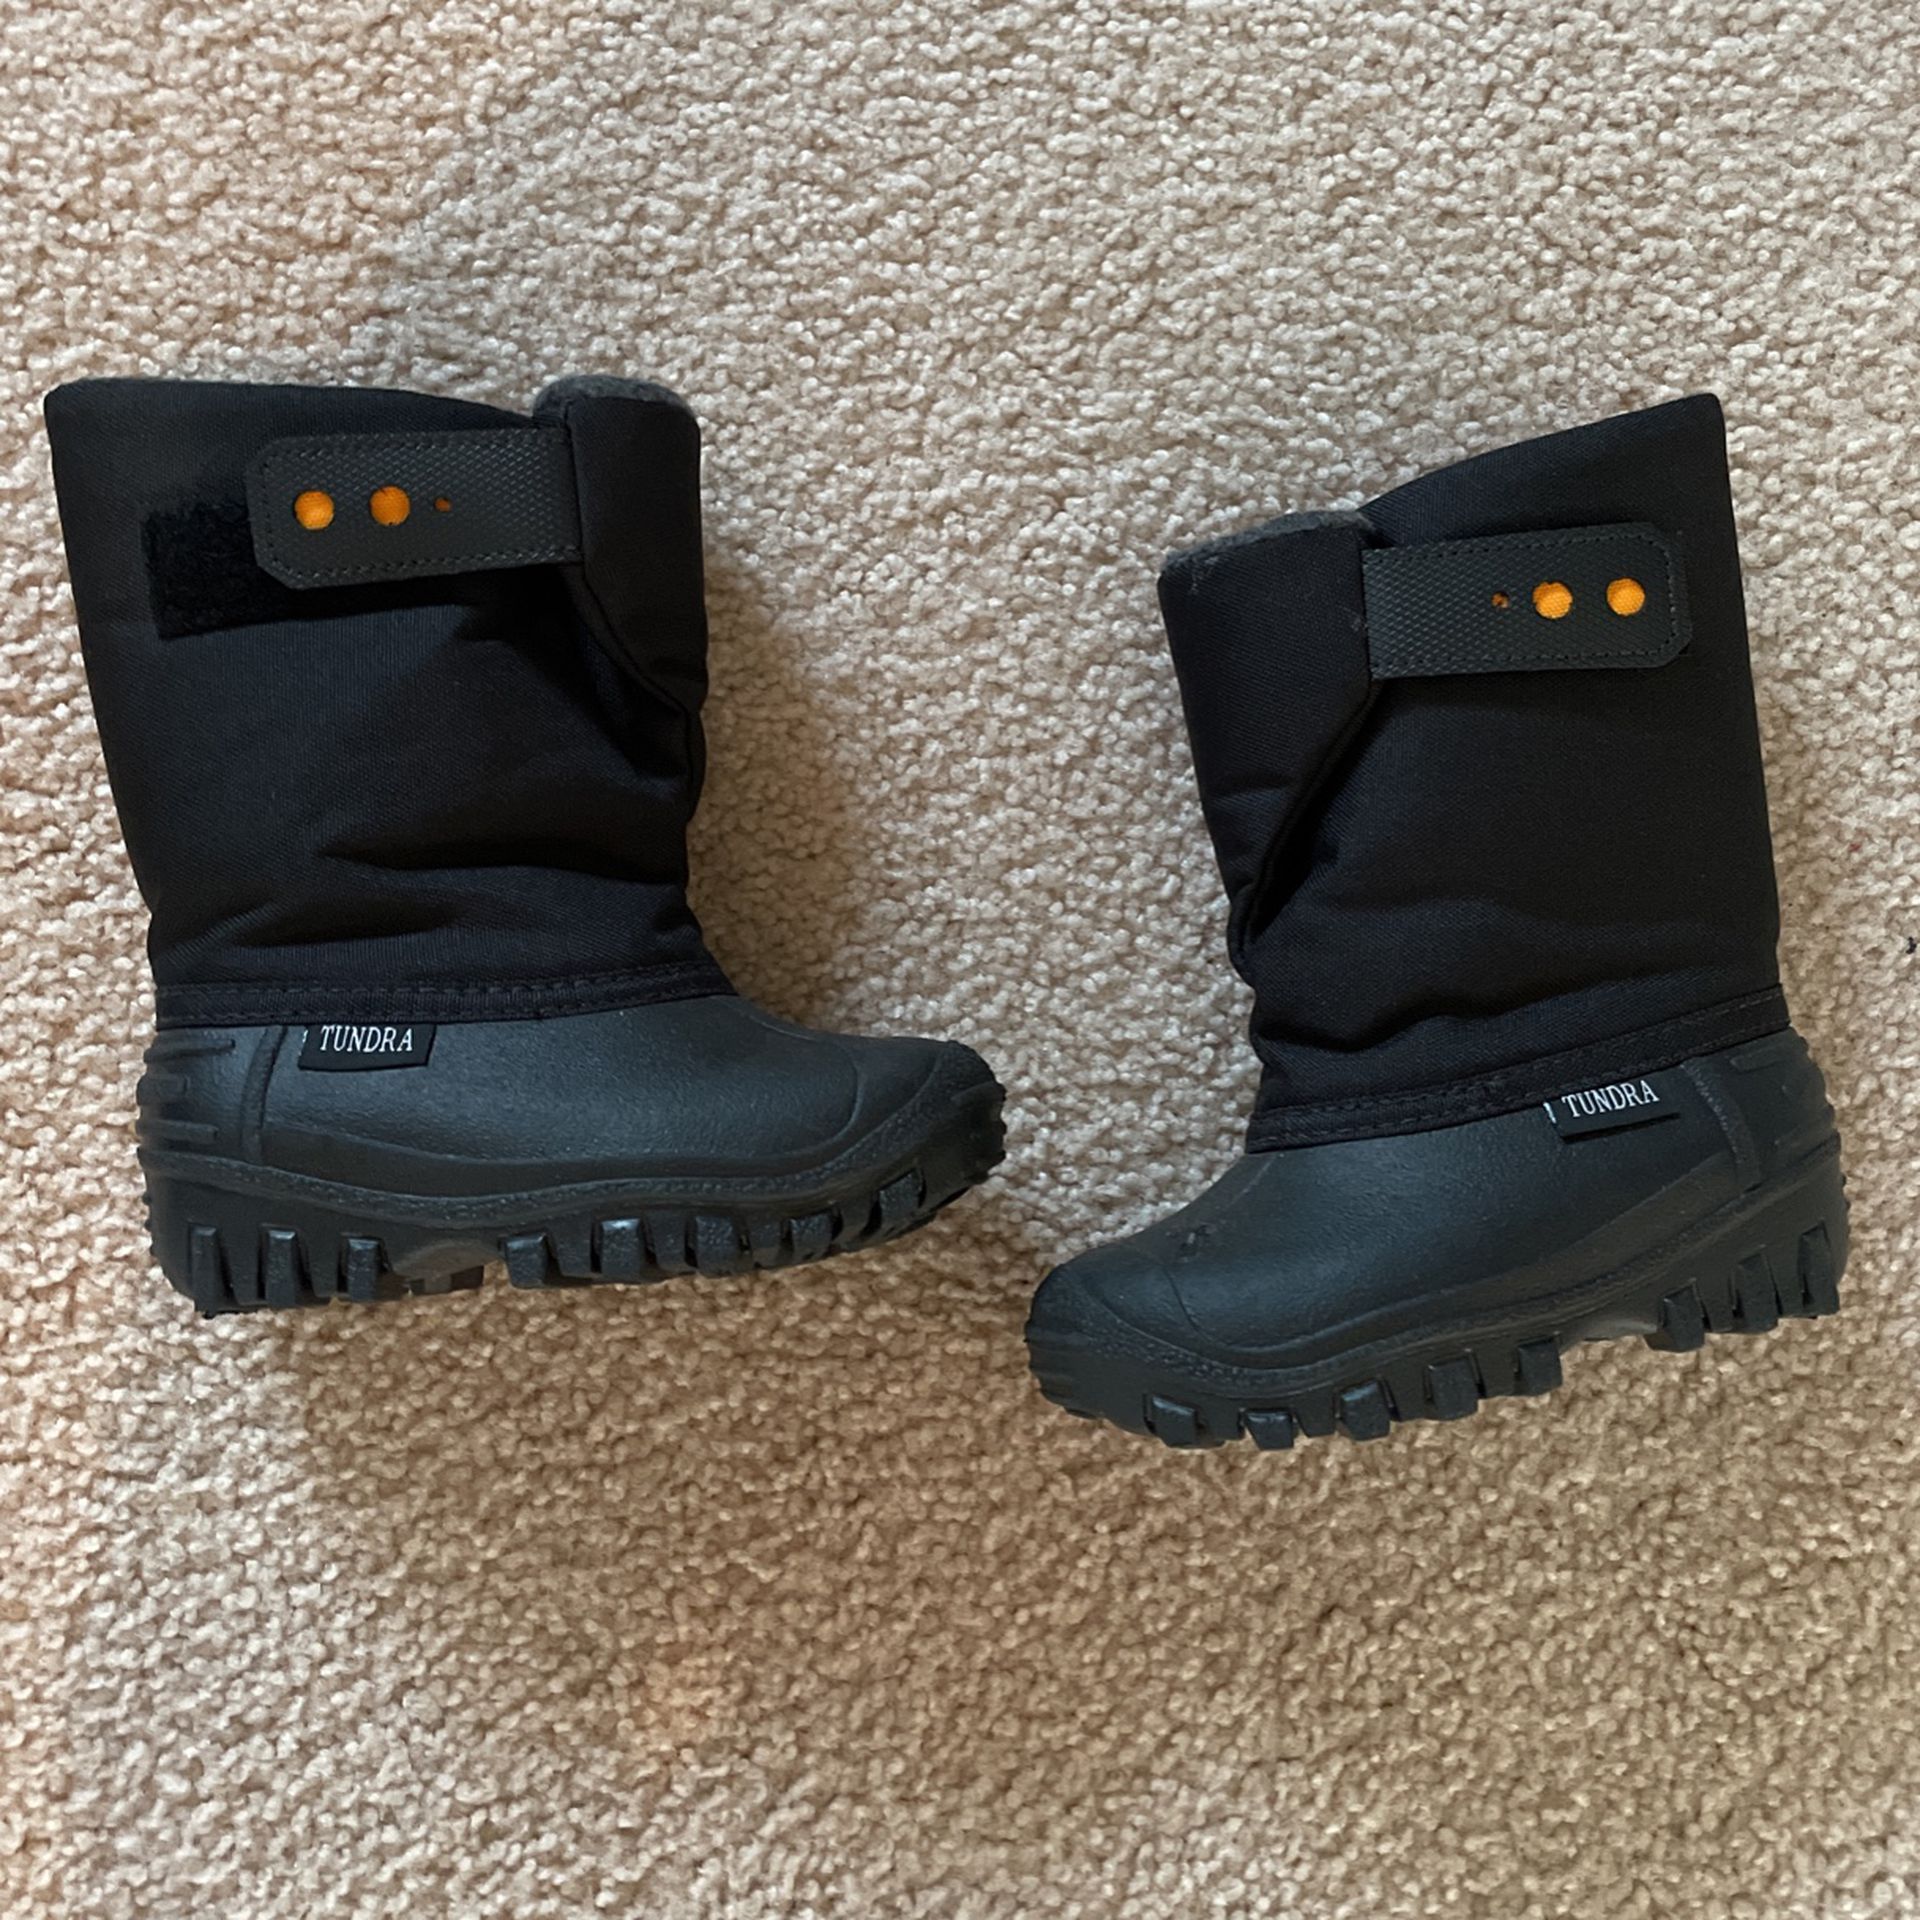 Tundra snow boots